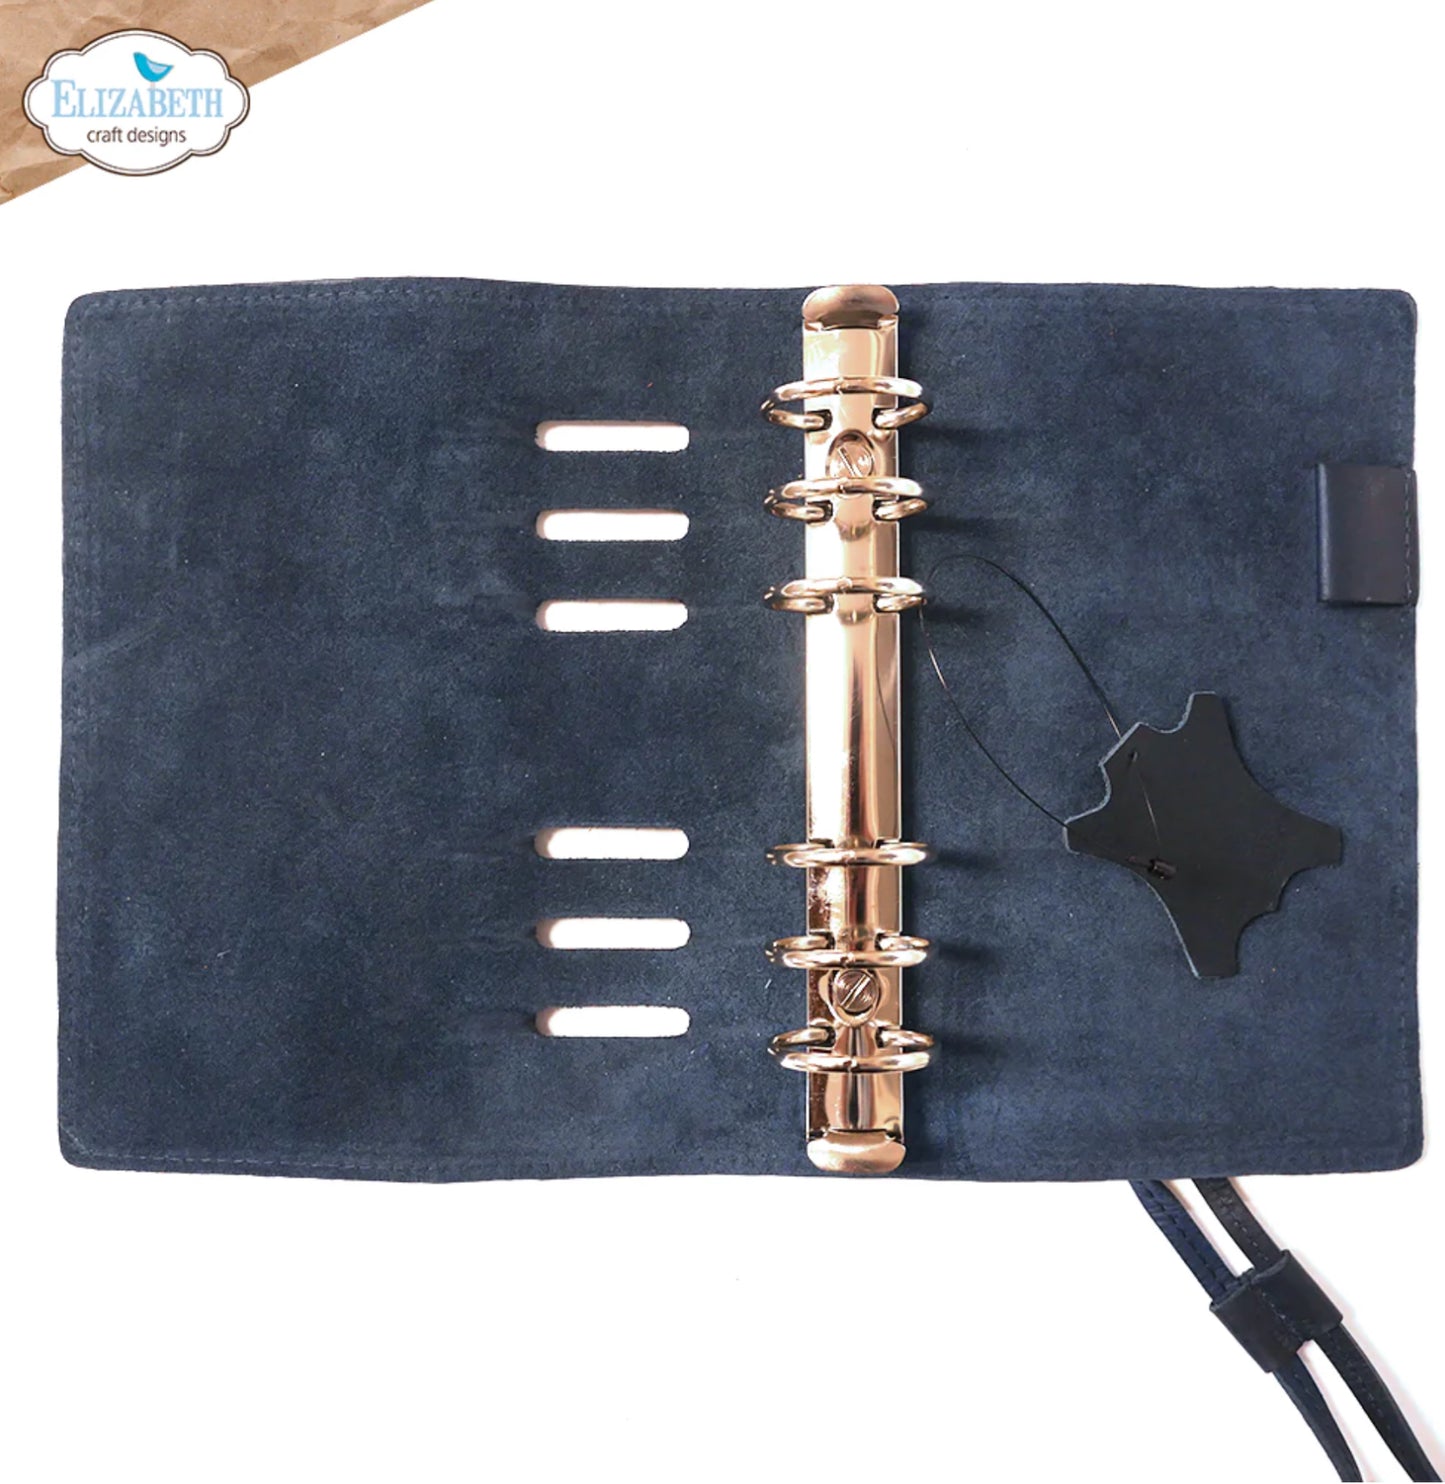 Elizabeth Craft Designs Sidekick Planner Handmade Italian Leather Blue